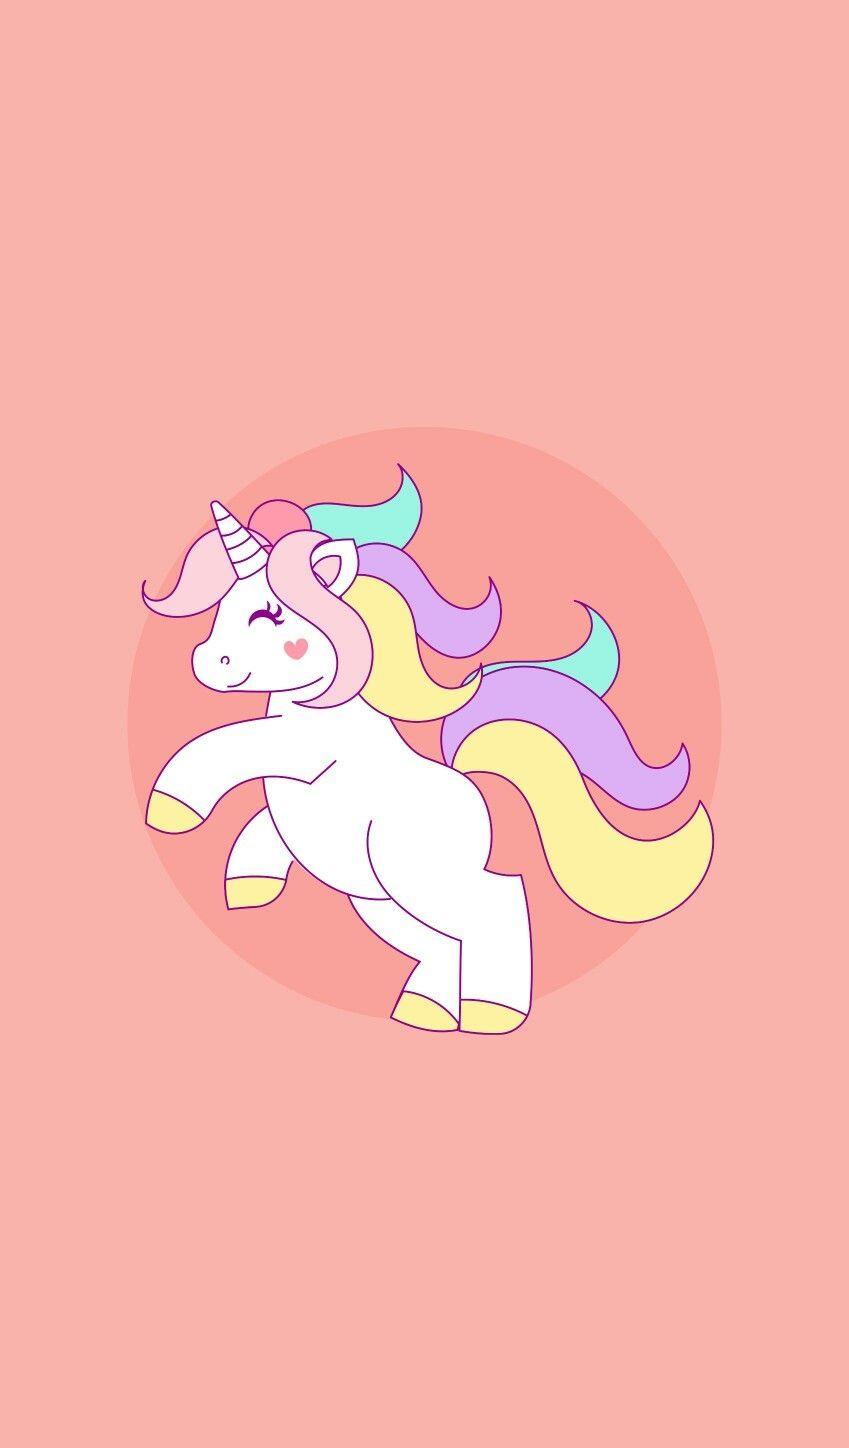 Fresh Unicorn Image Cartoon Design. Free Cartoon Image 2018